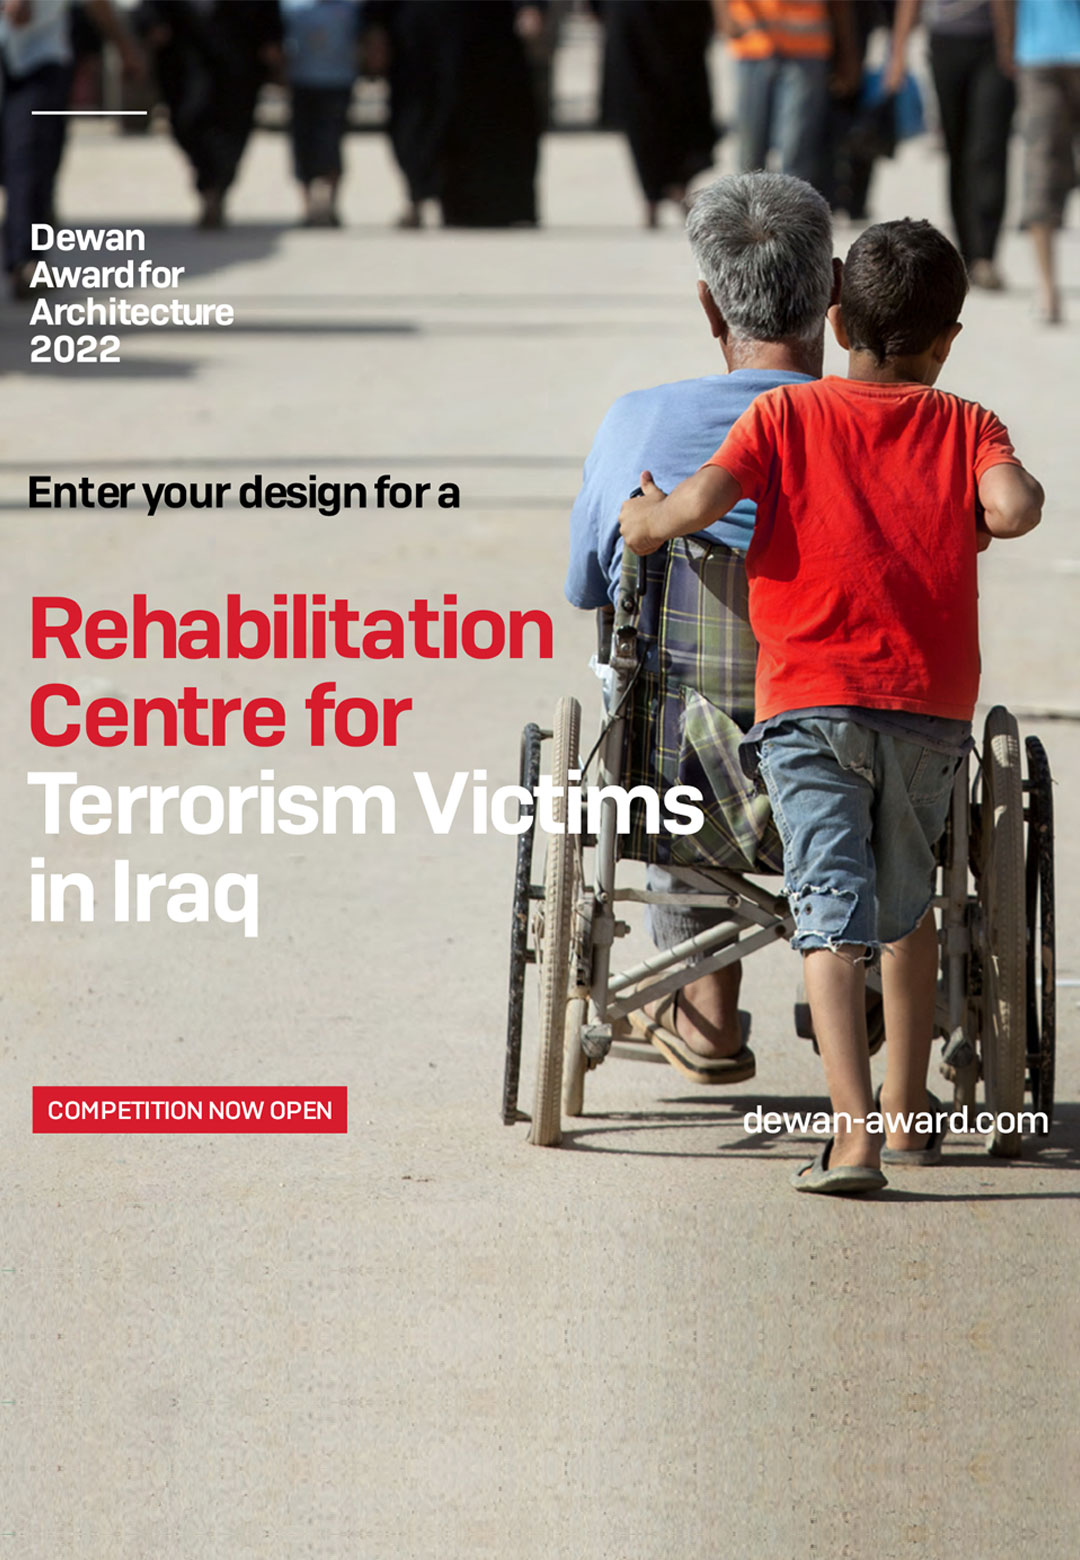 Dewan Award for Architecture 2022 seeks design proposals for rehabilitation centre in Iraq